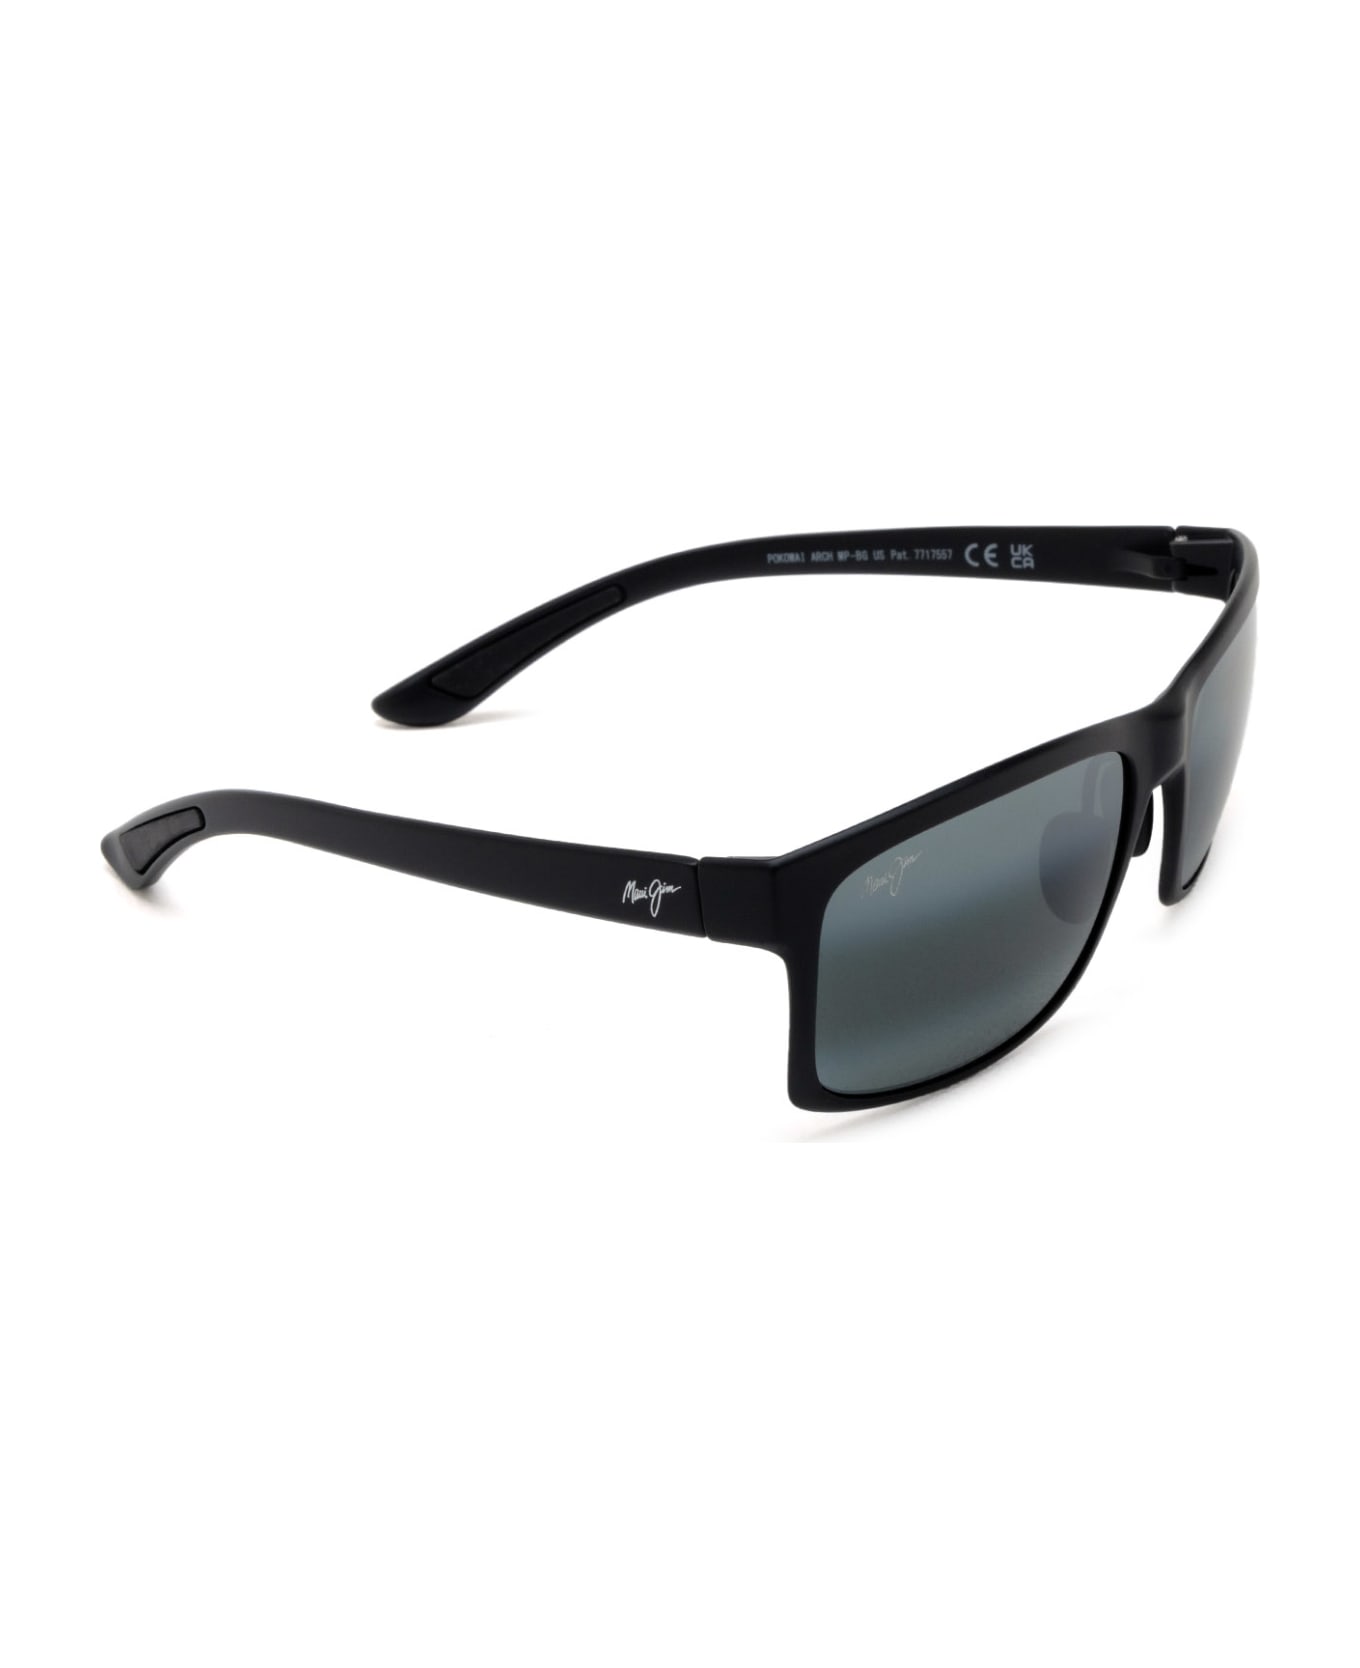 Maui Jim Mj439 Black Matte Sunglasses - Black Matte サングラス